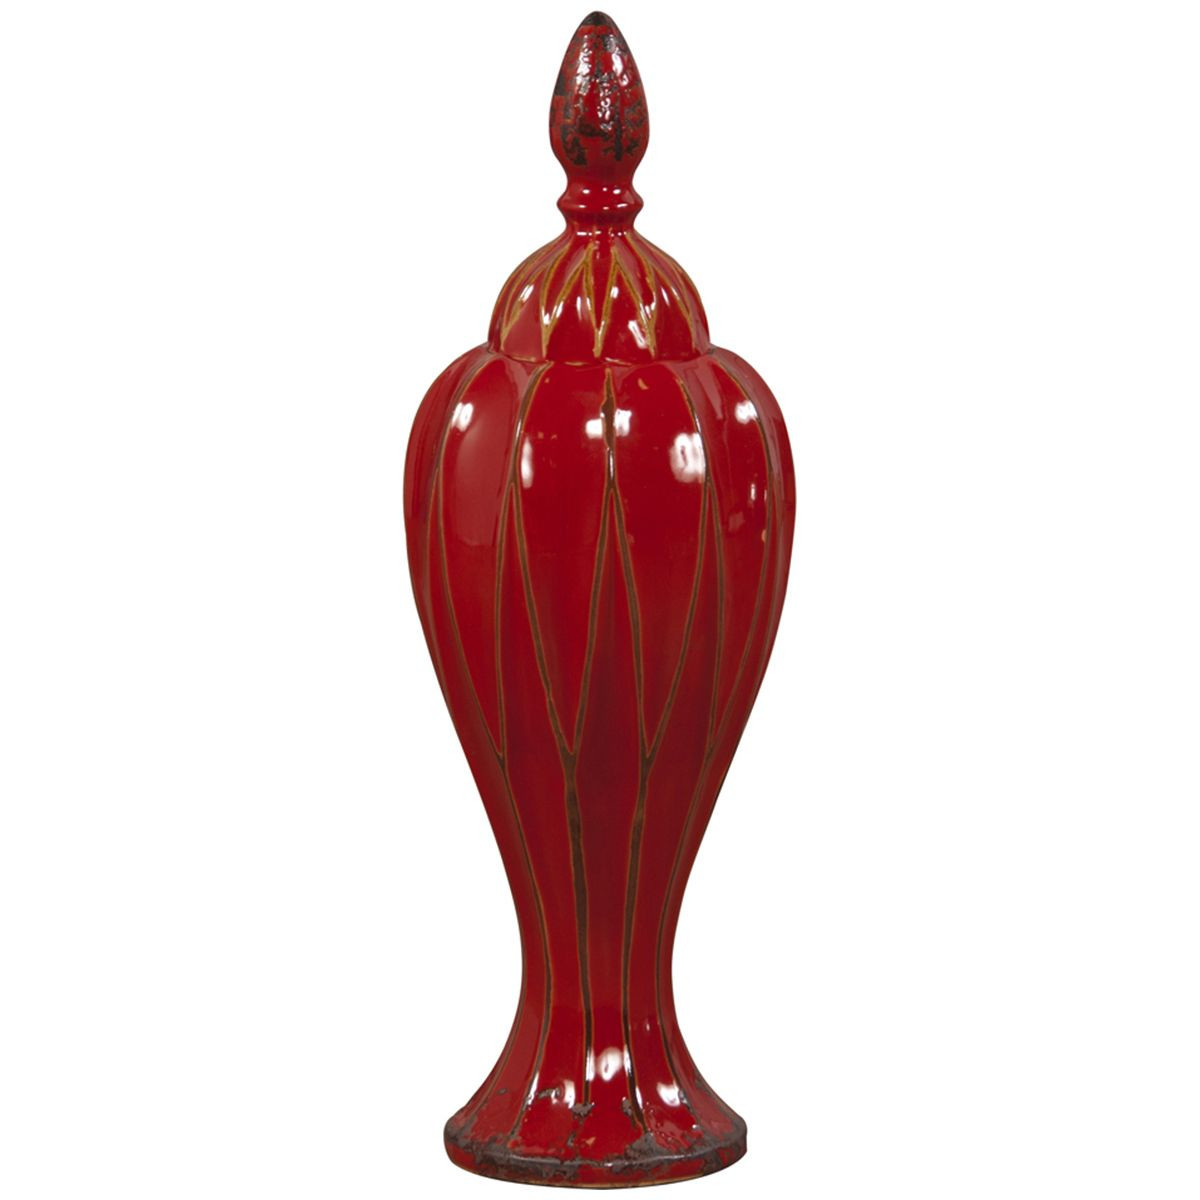 red ceramic vases and urns of howard elliott glossy red glaze ceramic vase with lid howard pertaining to howard elliott glossy red glaze ceramic vase with lid